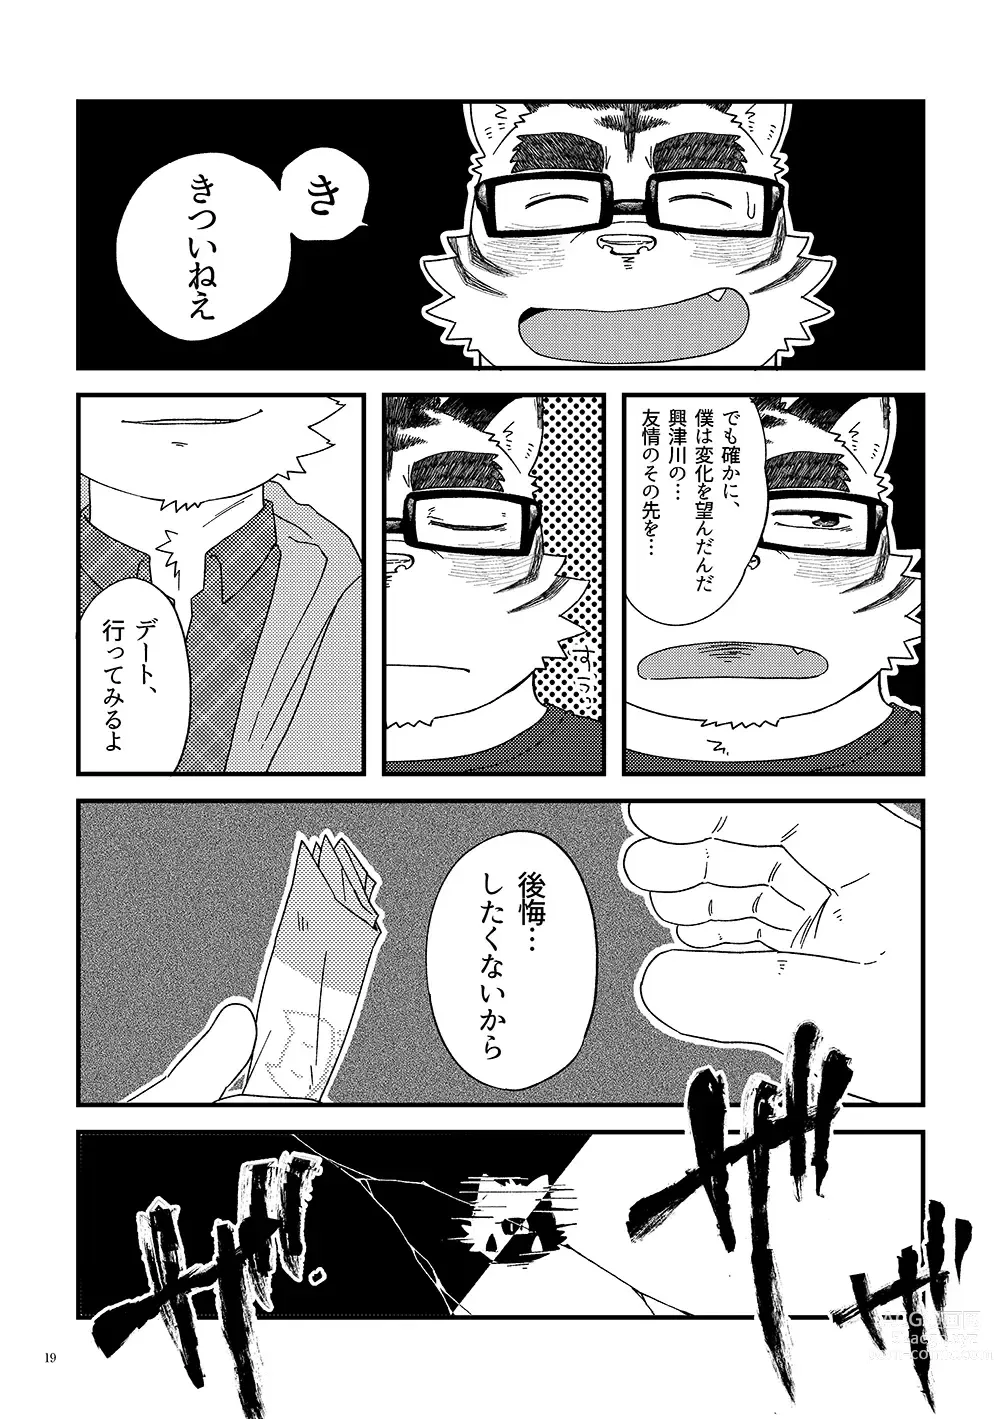 Page 20 of doujinshi Sanbunnoichi Vol 2: Datte sukidakara.